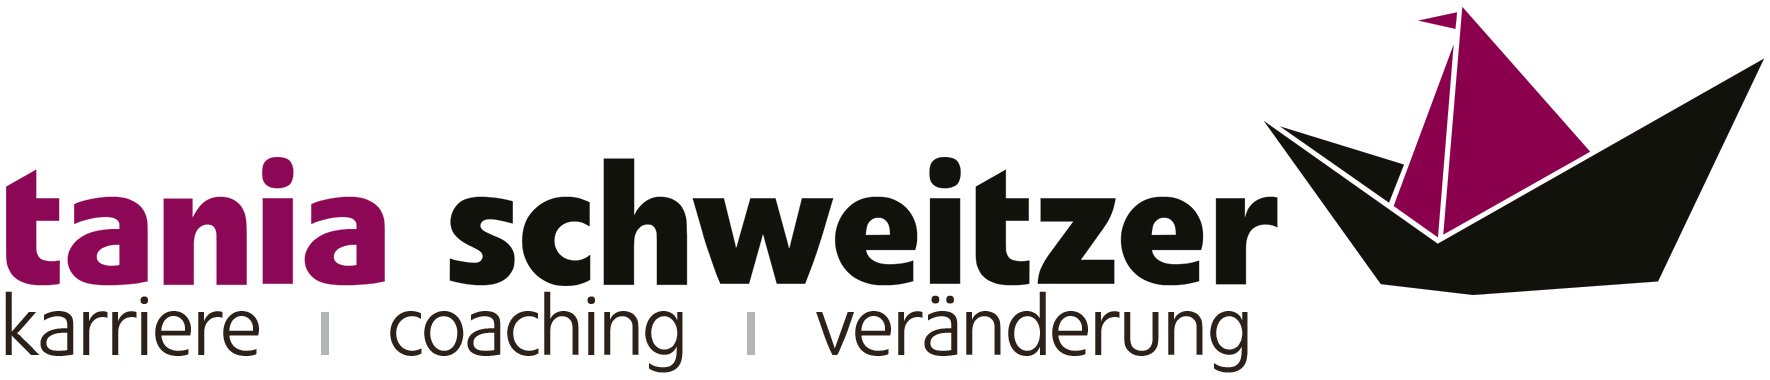 Tania Schweitzer Logo.